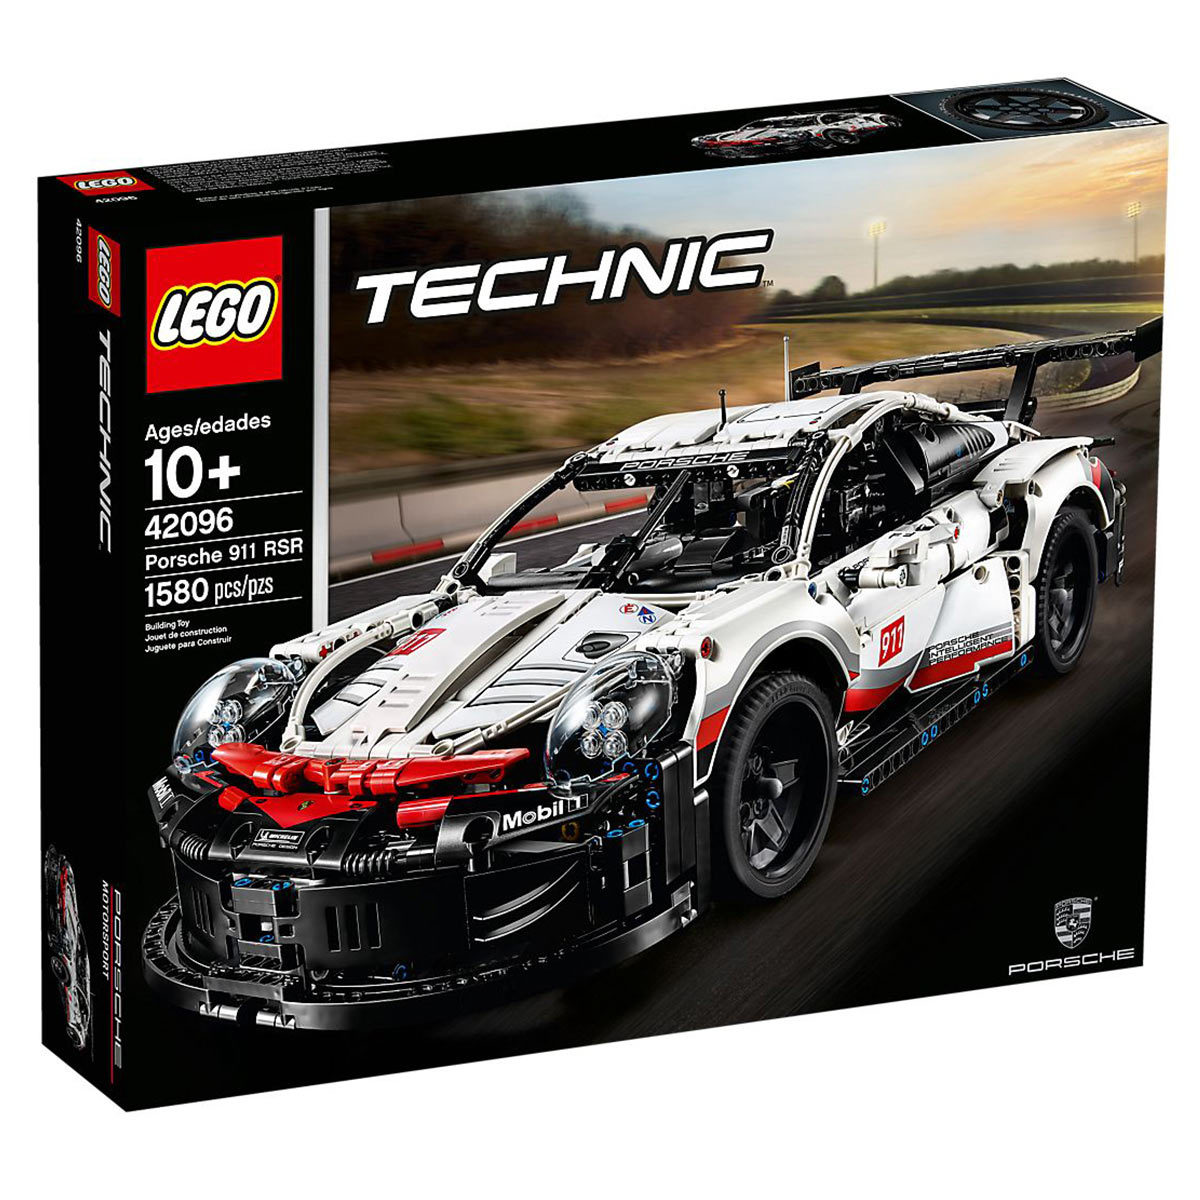 LEGO Technic Porsche 911 RSR - Model 42096 (10+ Years)